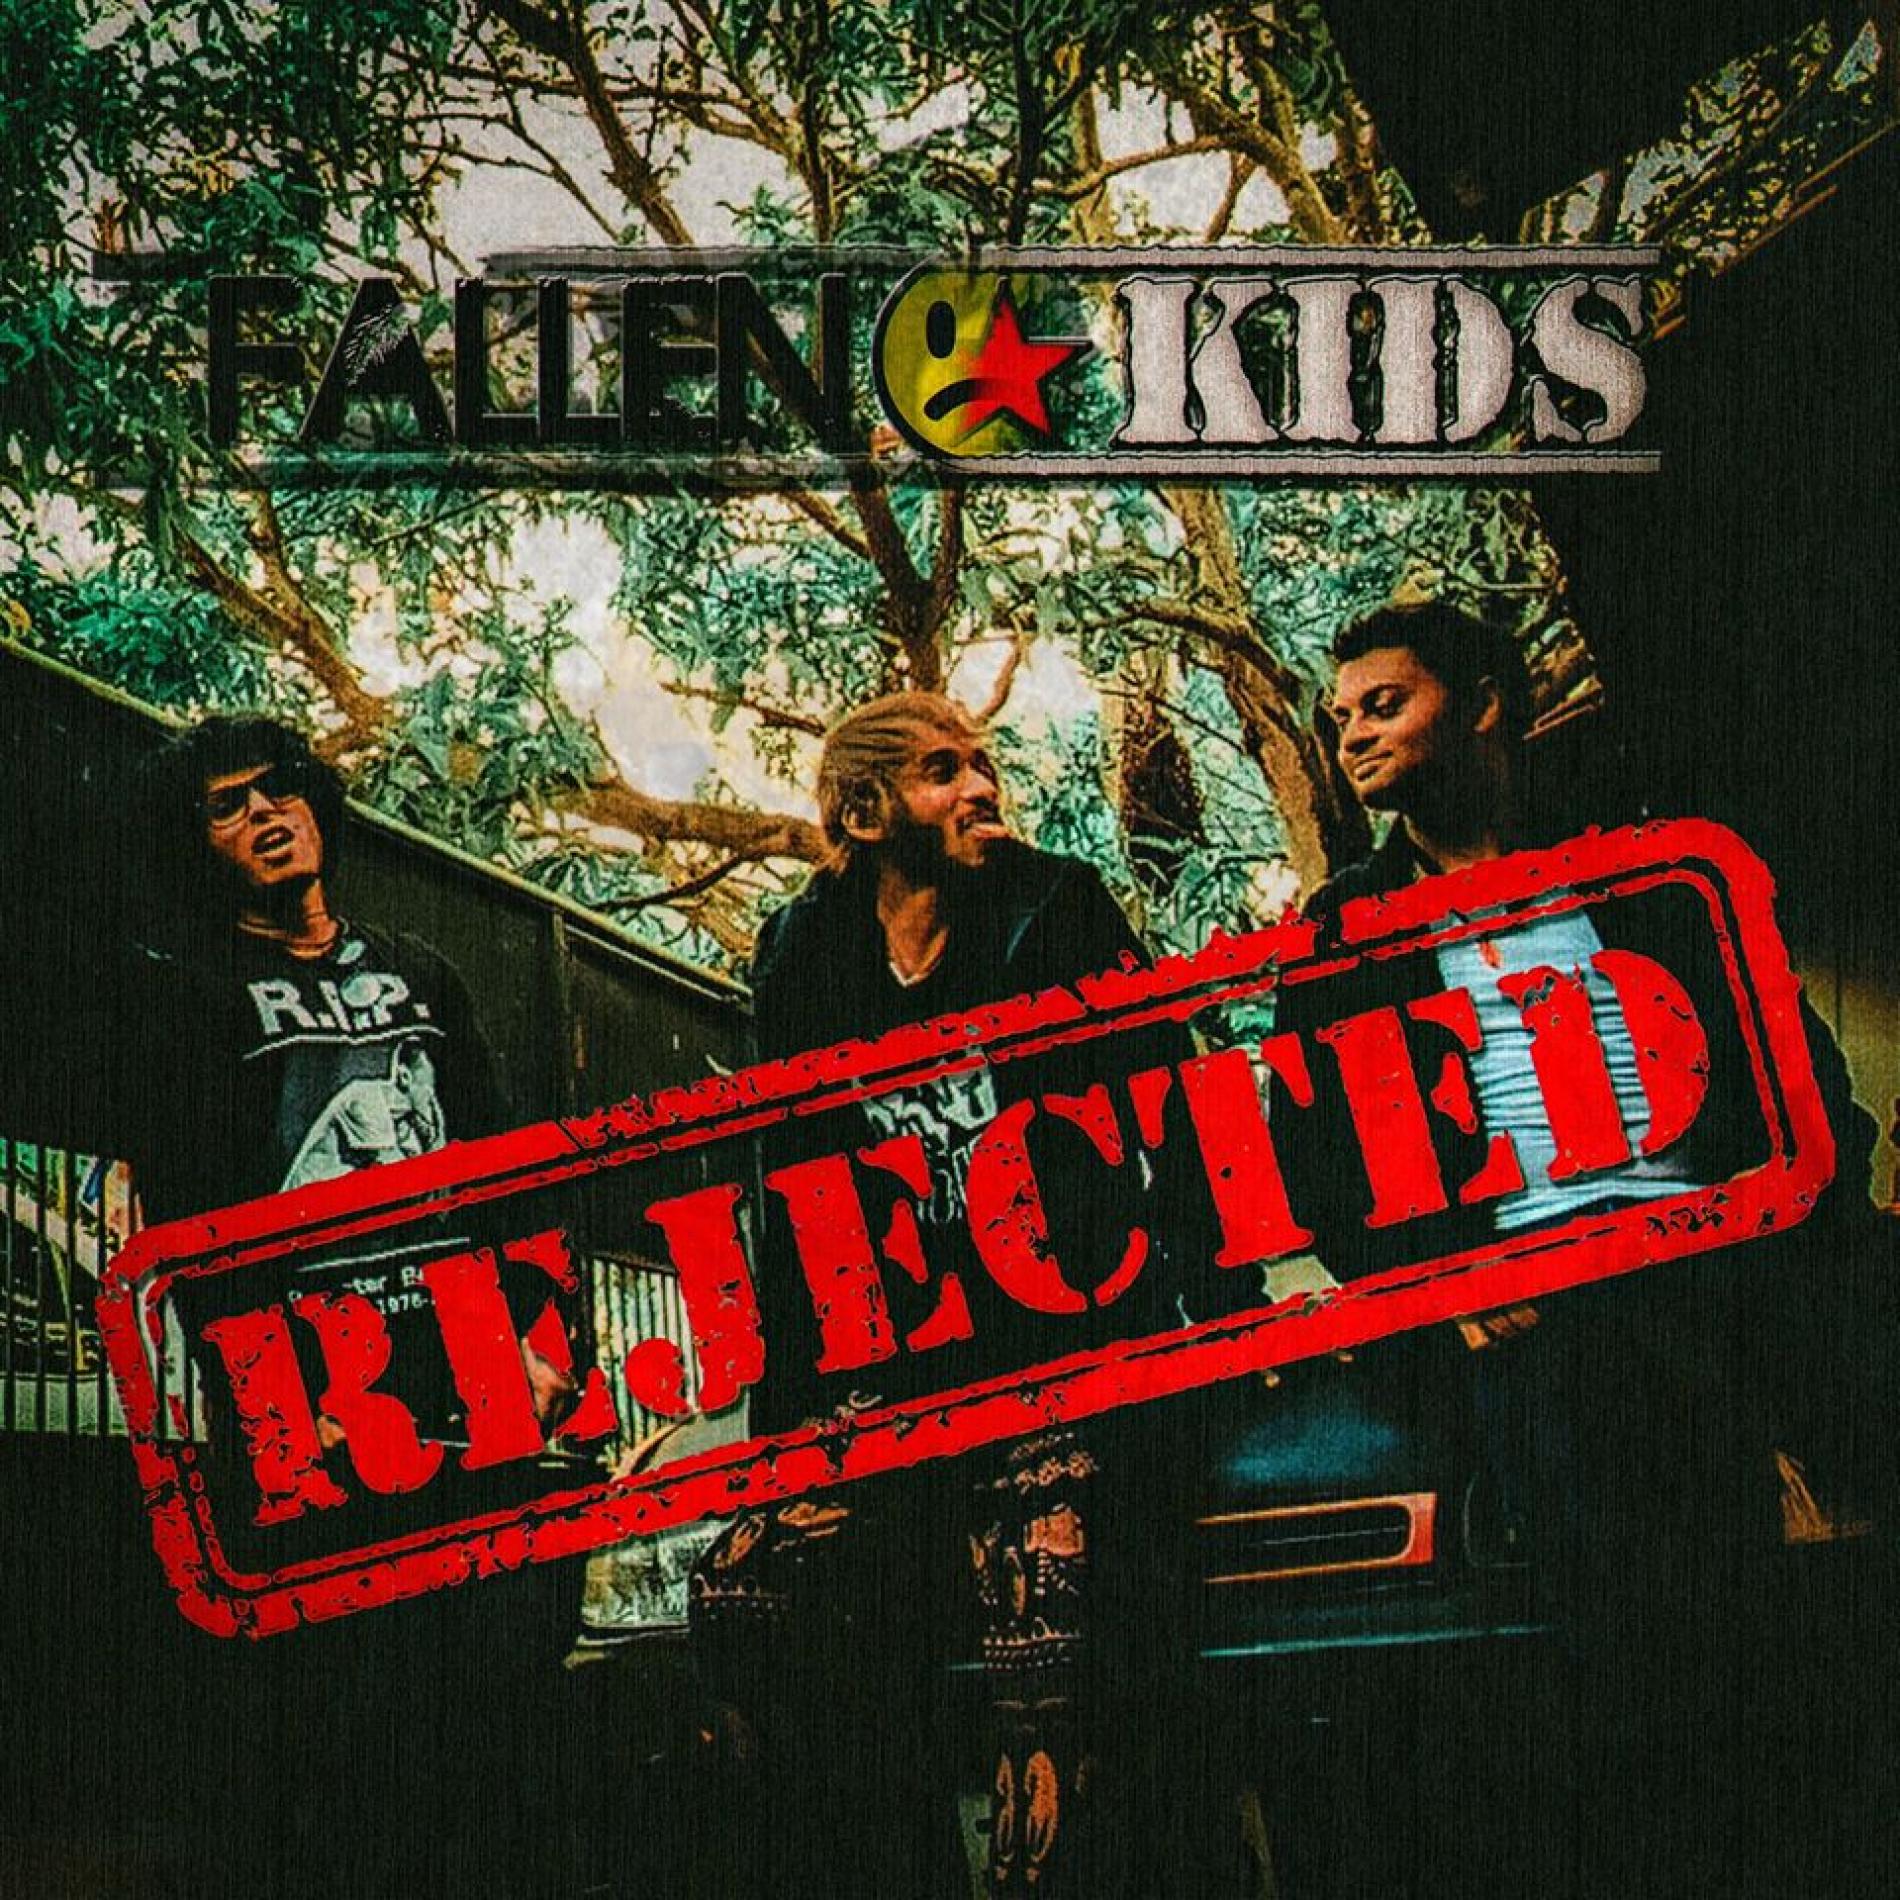 The Fallen Kids Release Their First Album!